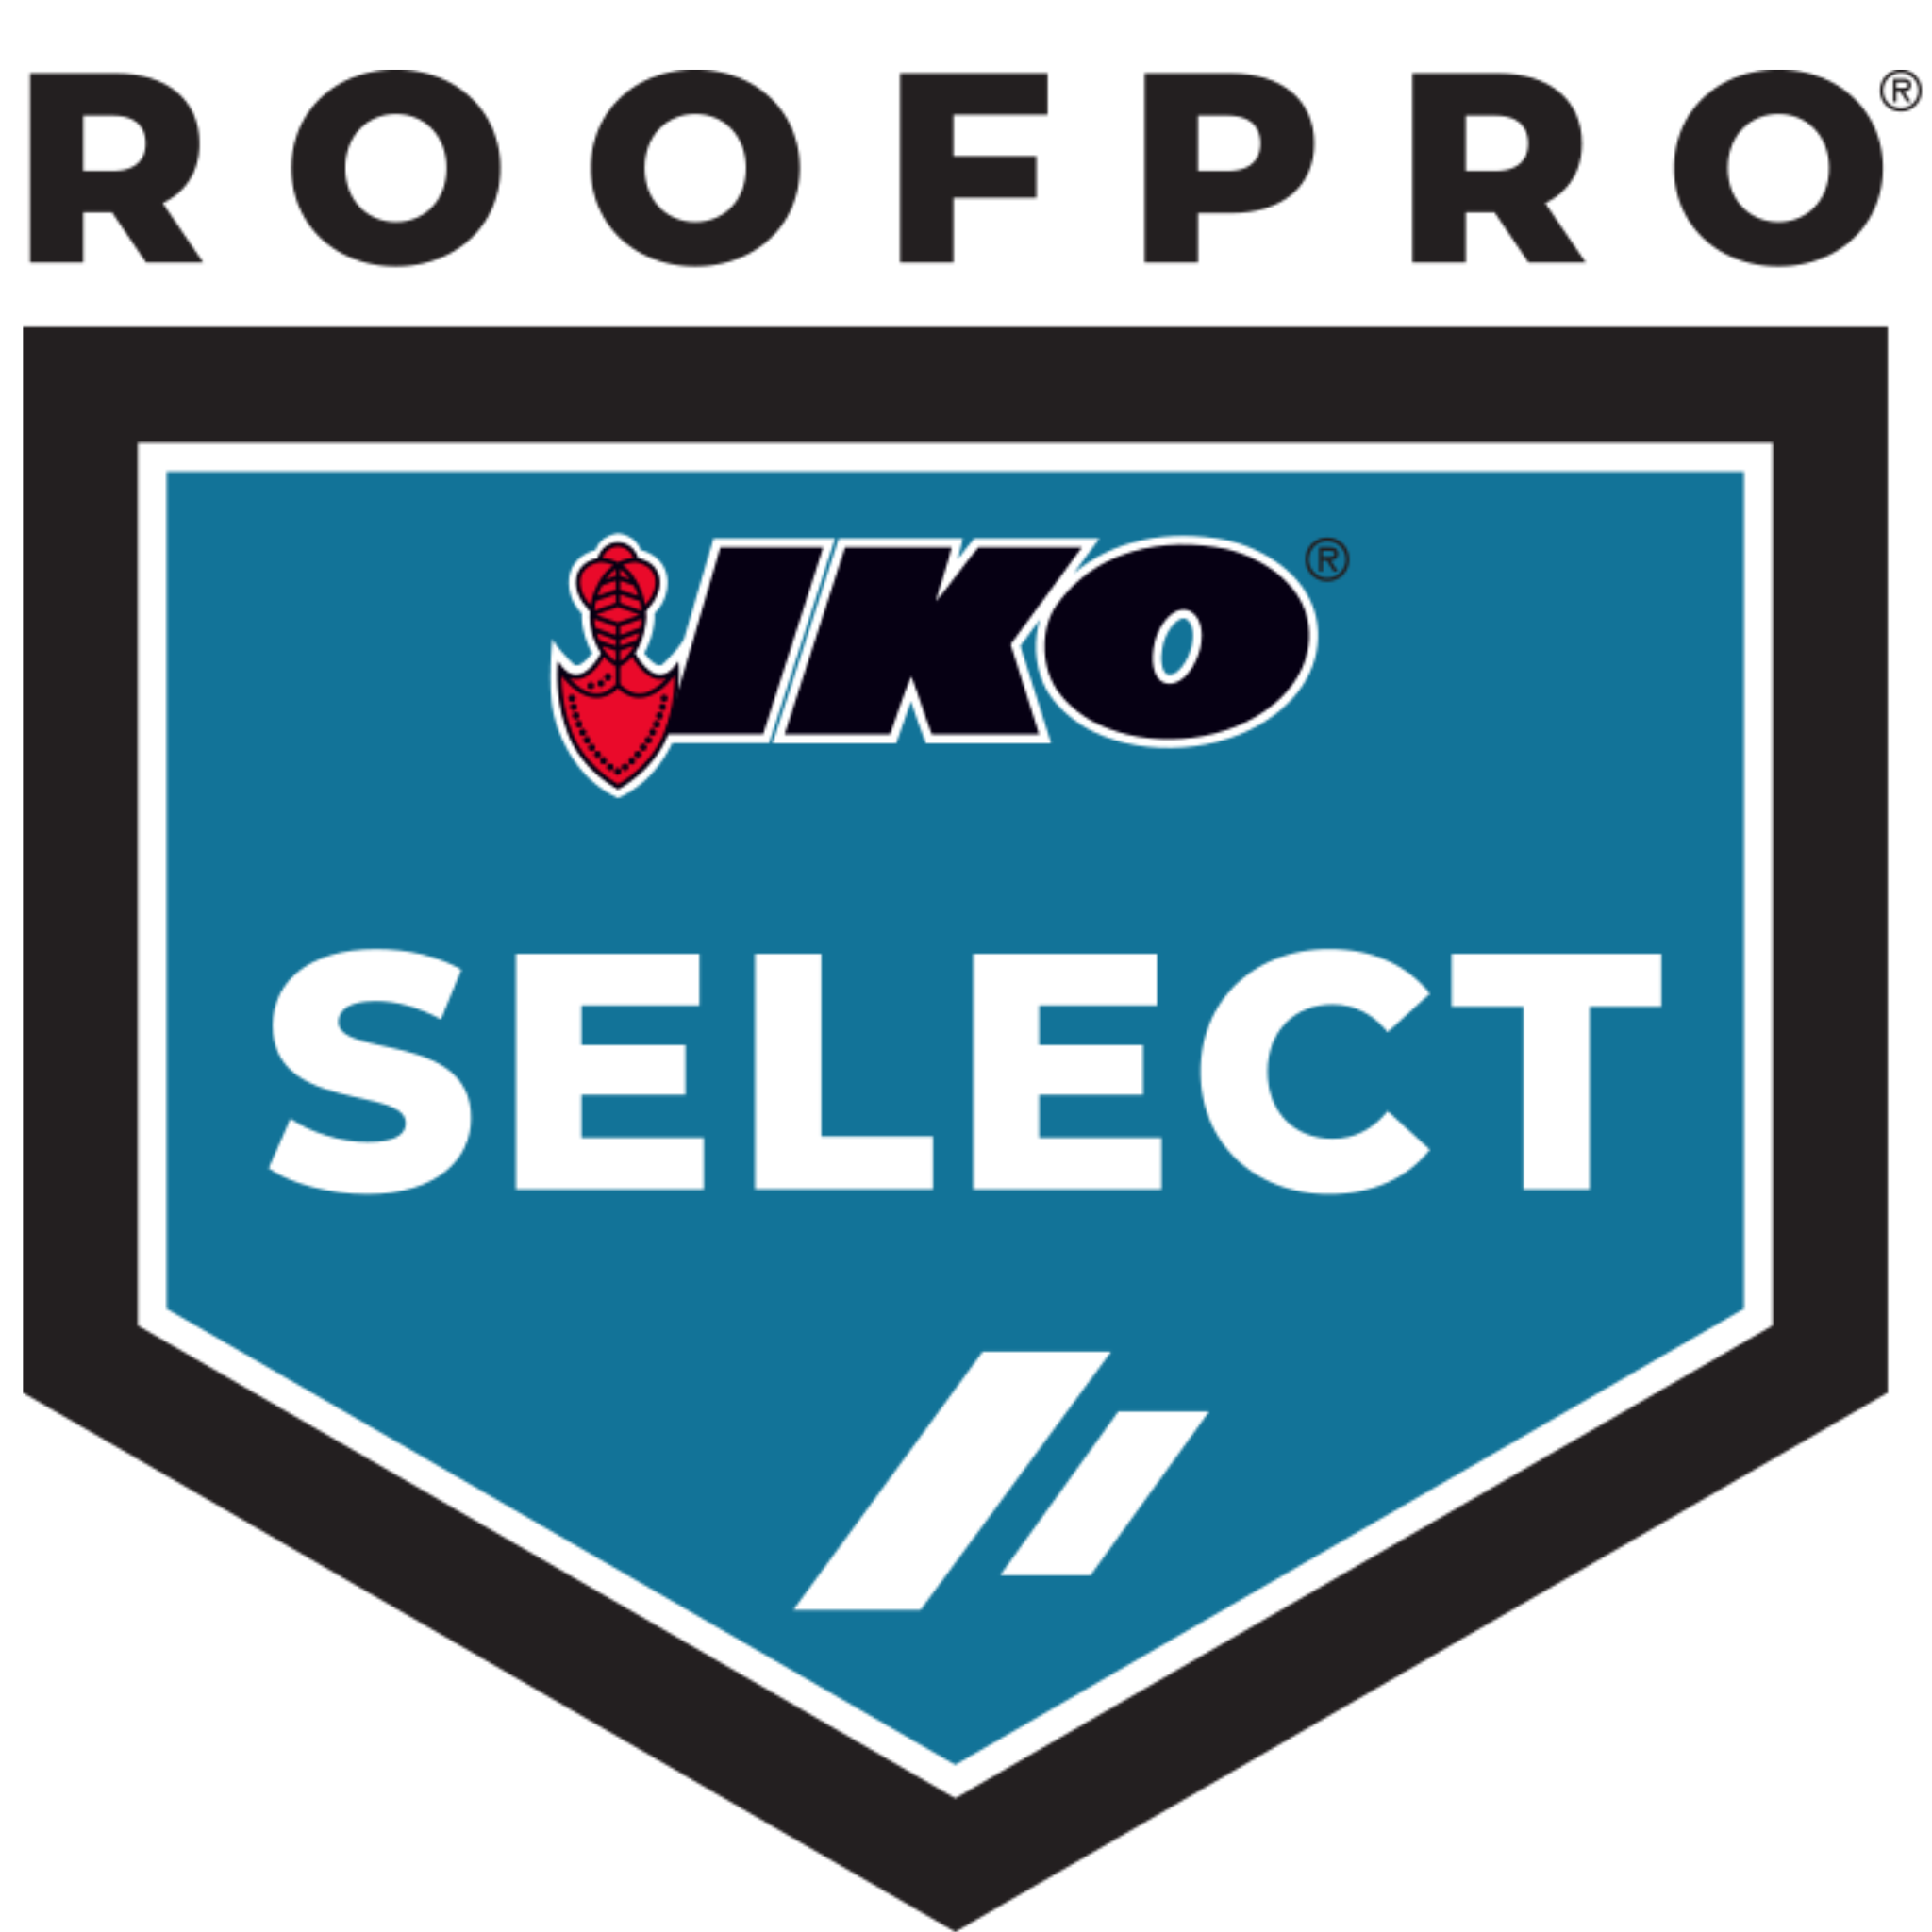 Iko Roofpro Select